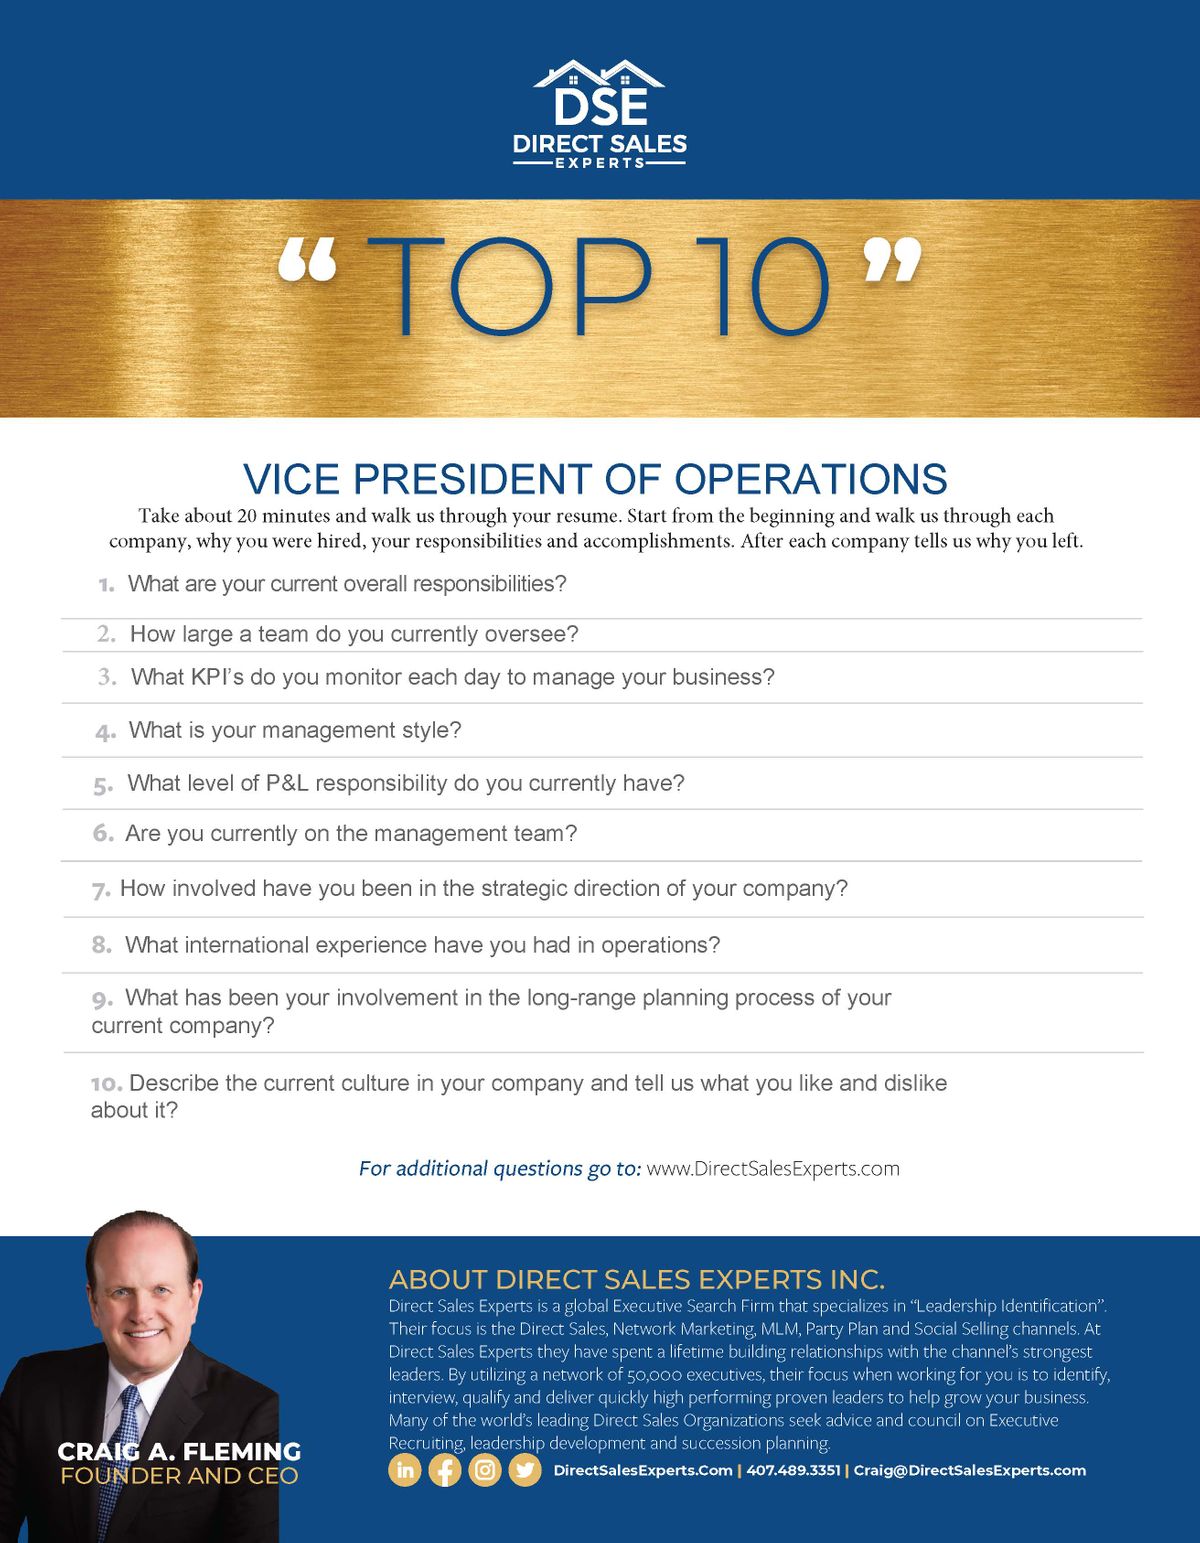 DirectSalesExperts_Top10-VicePresidentofOperations-jpeg_Page_1.jpg